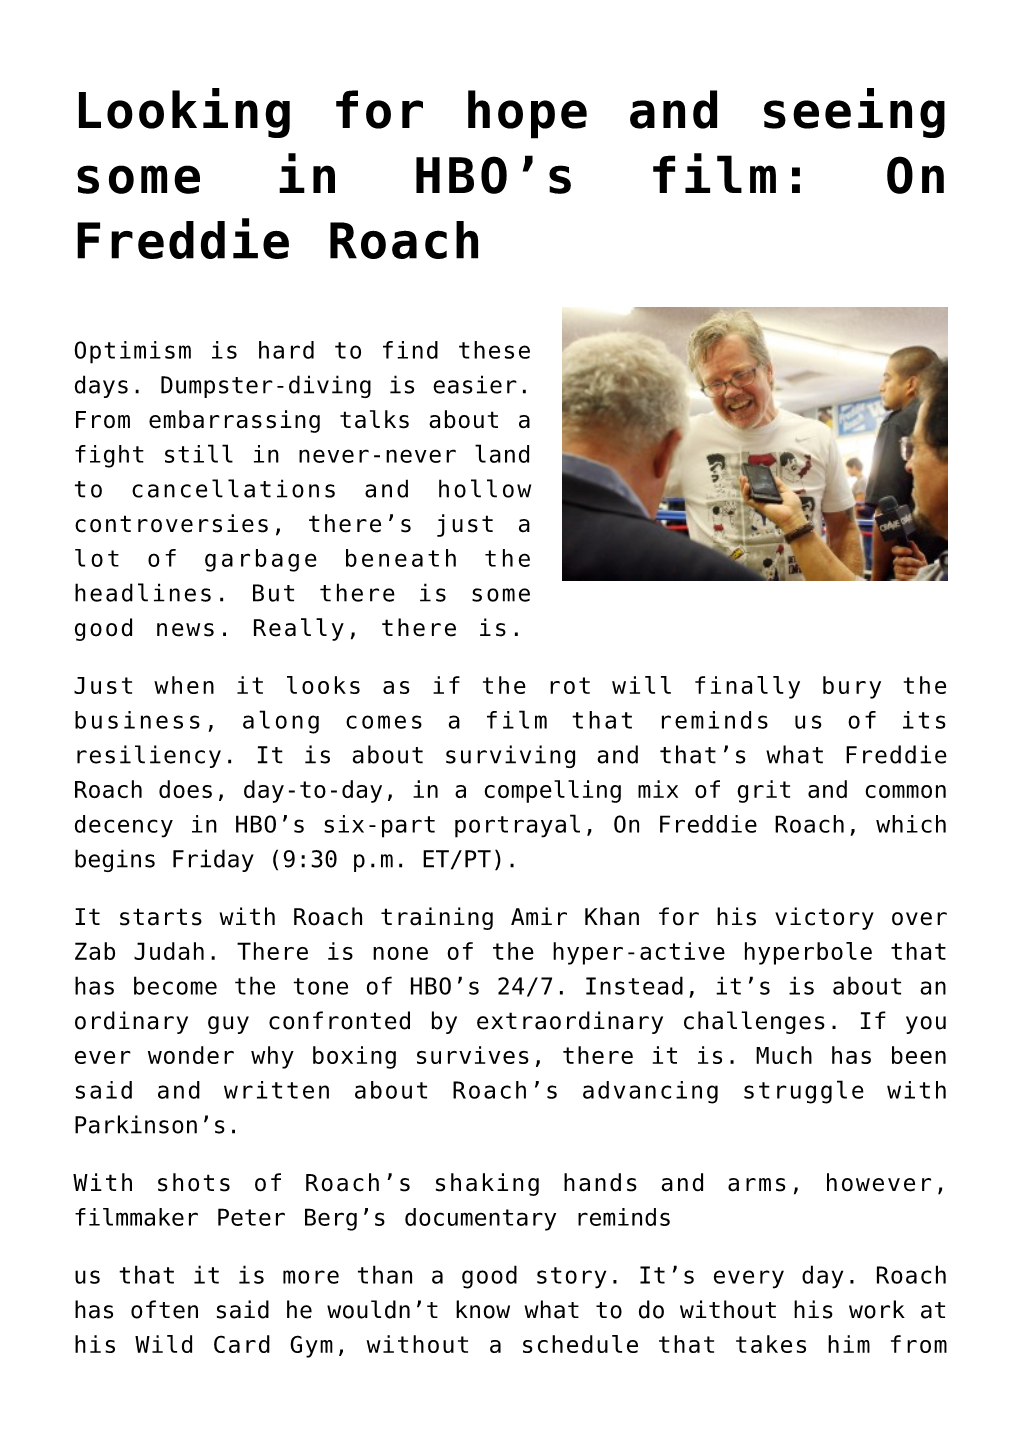 On Freddie Roach